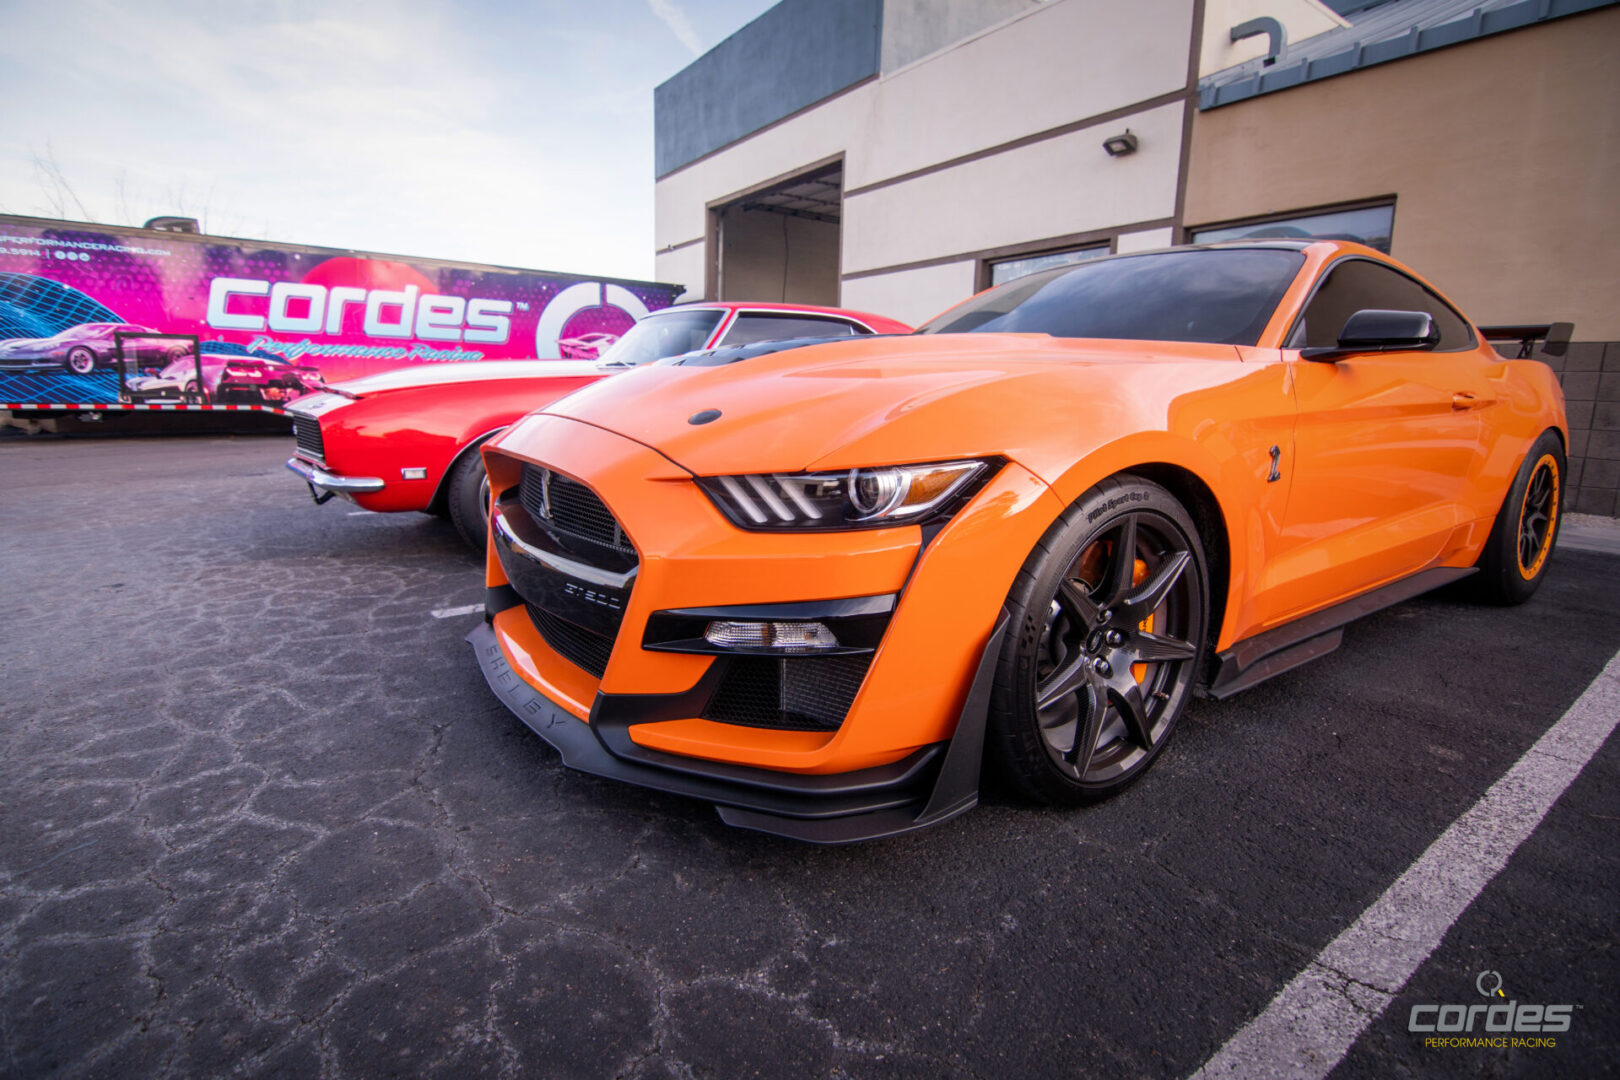 A red sports car and an orange sports car